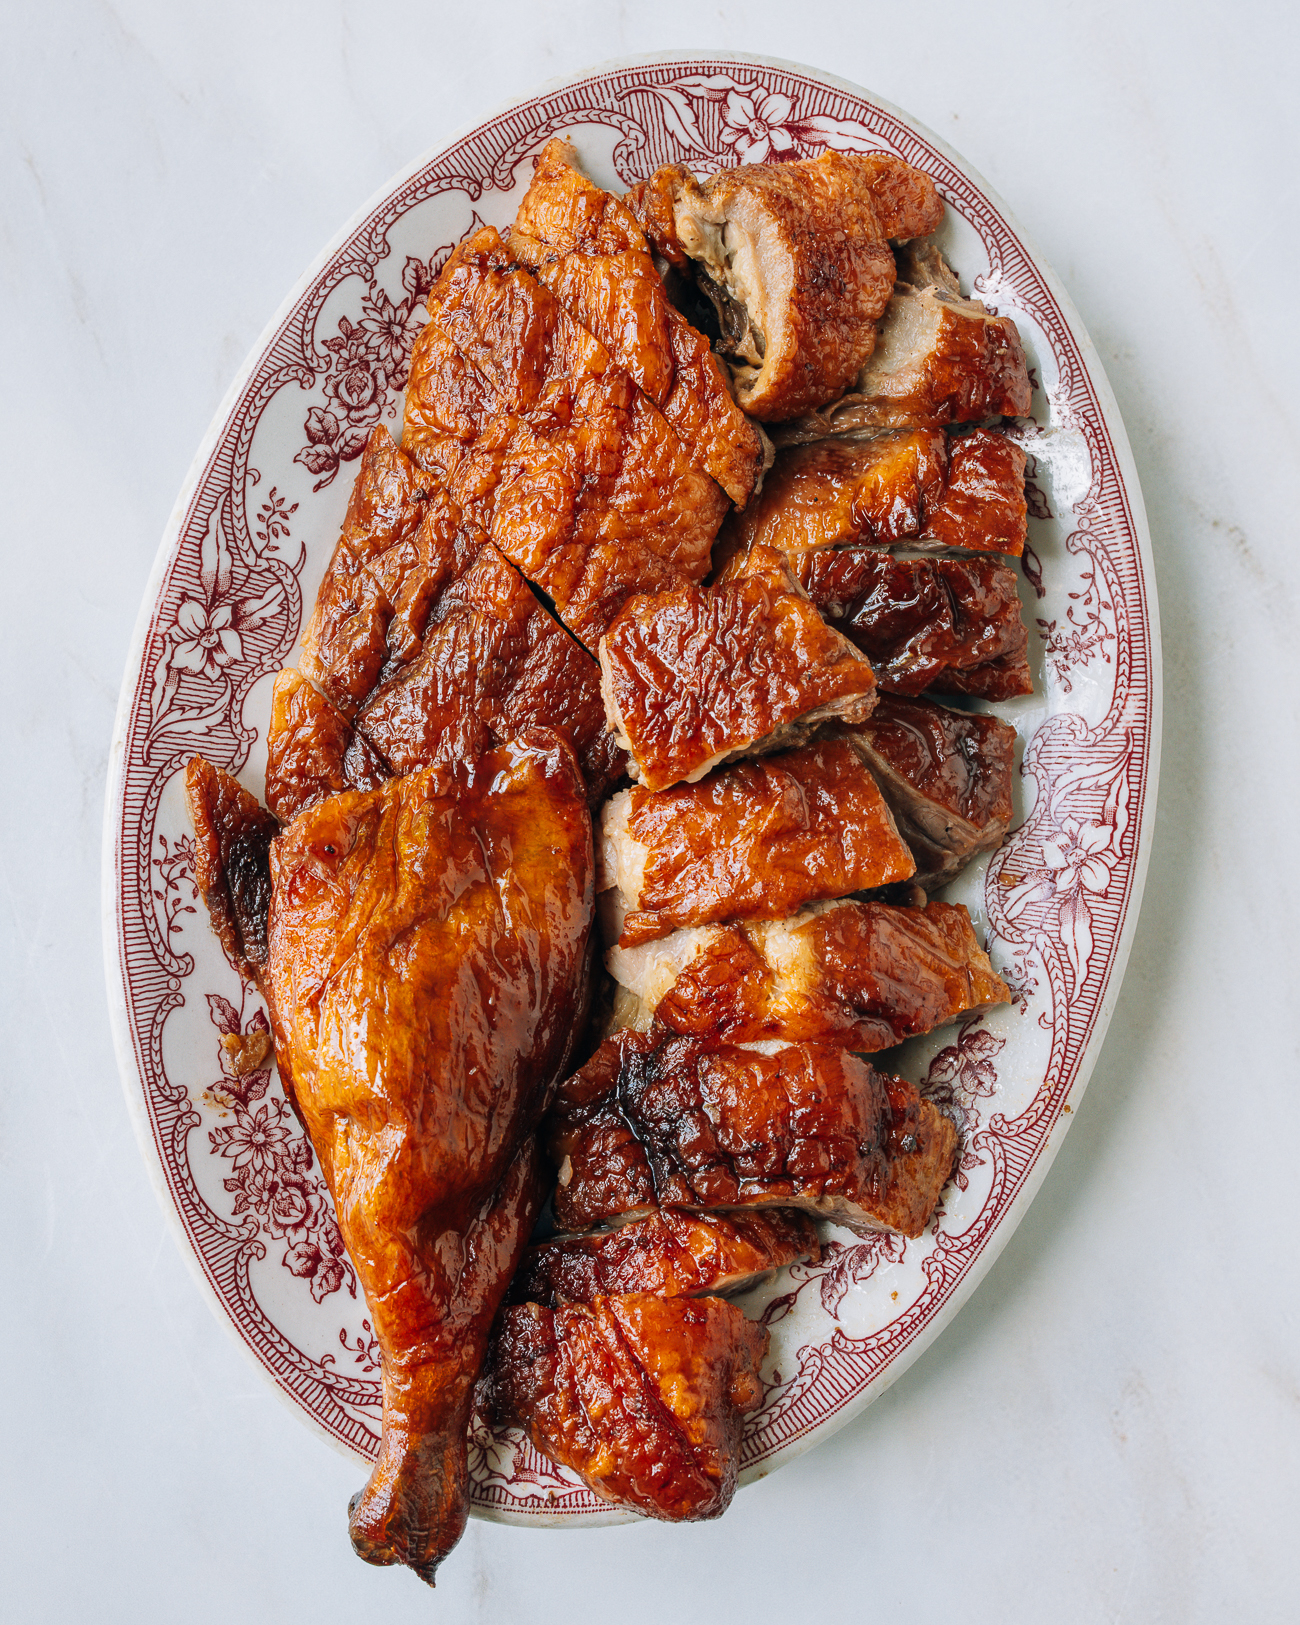 Chinese roast duck on platter